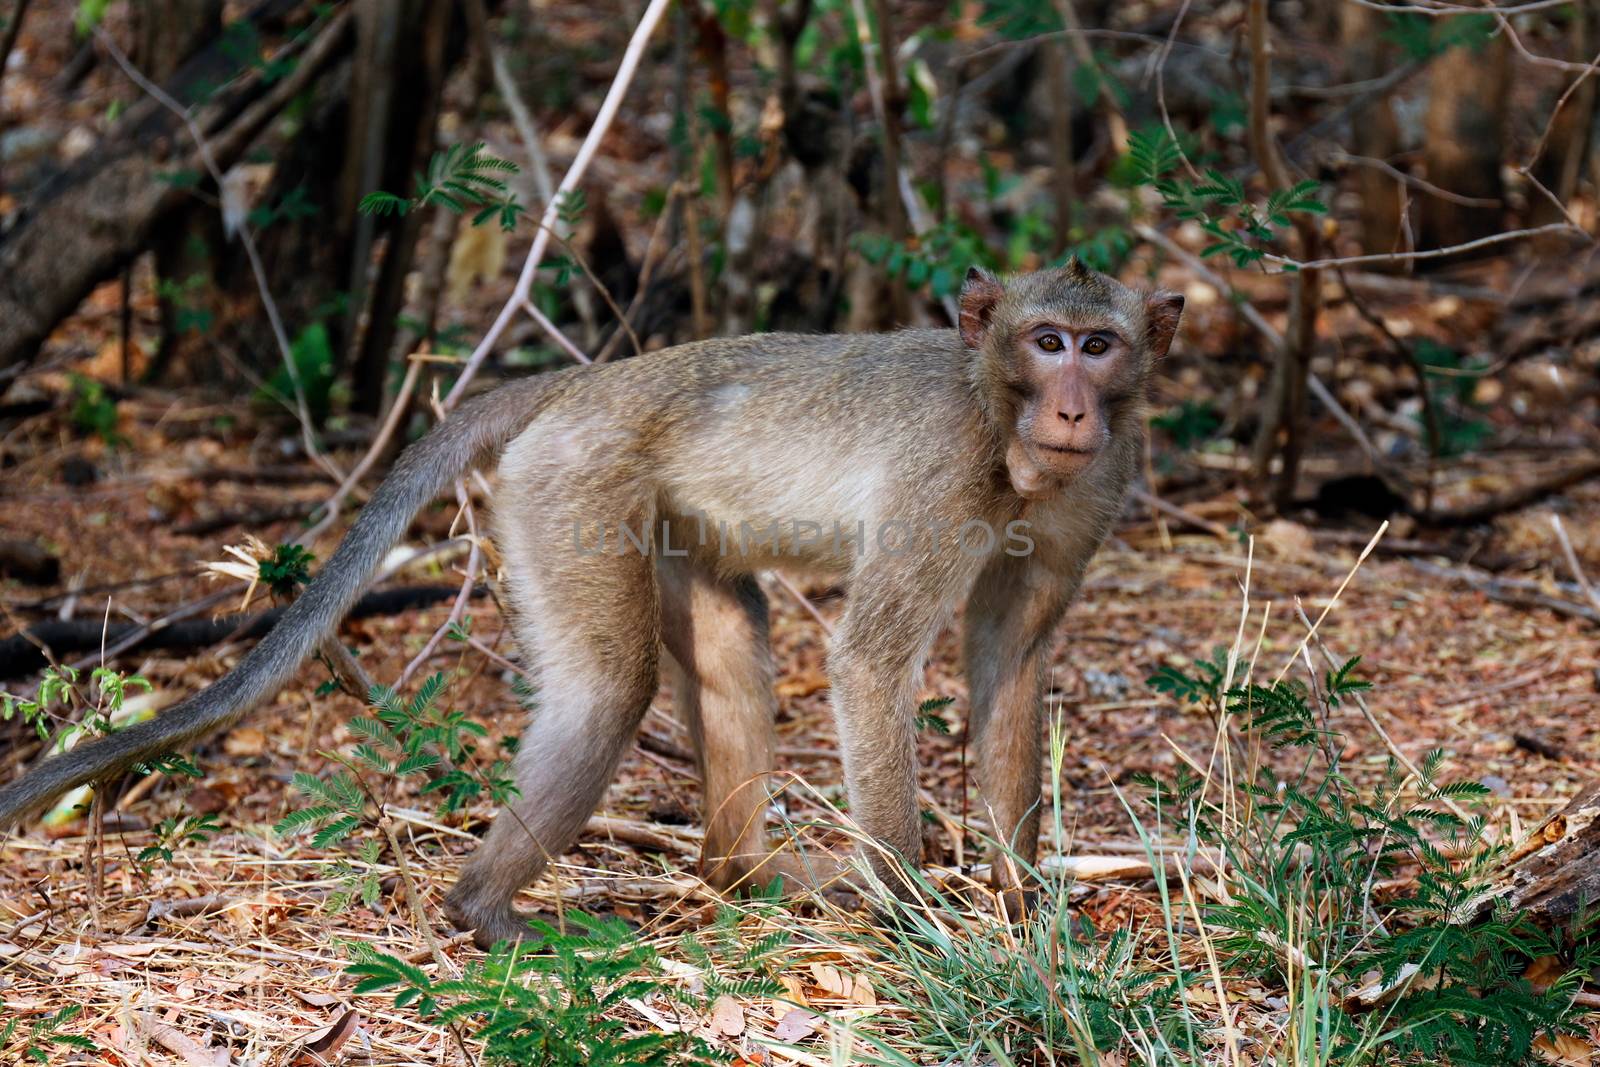 Monkey, Monkeys walk in the wild by cgdeaw